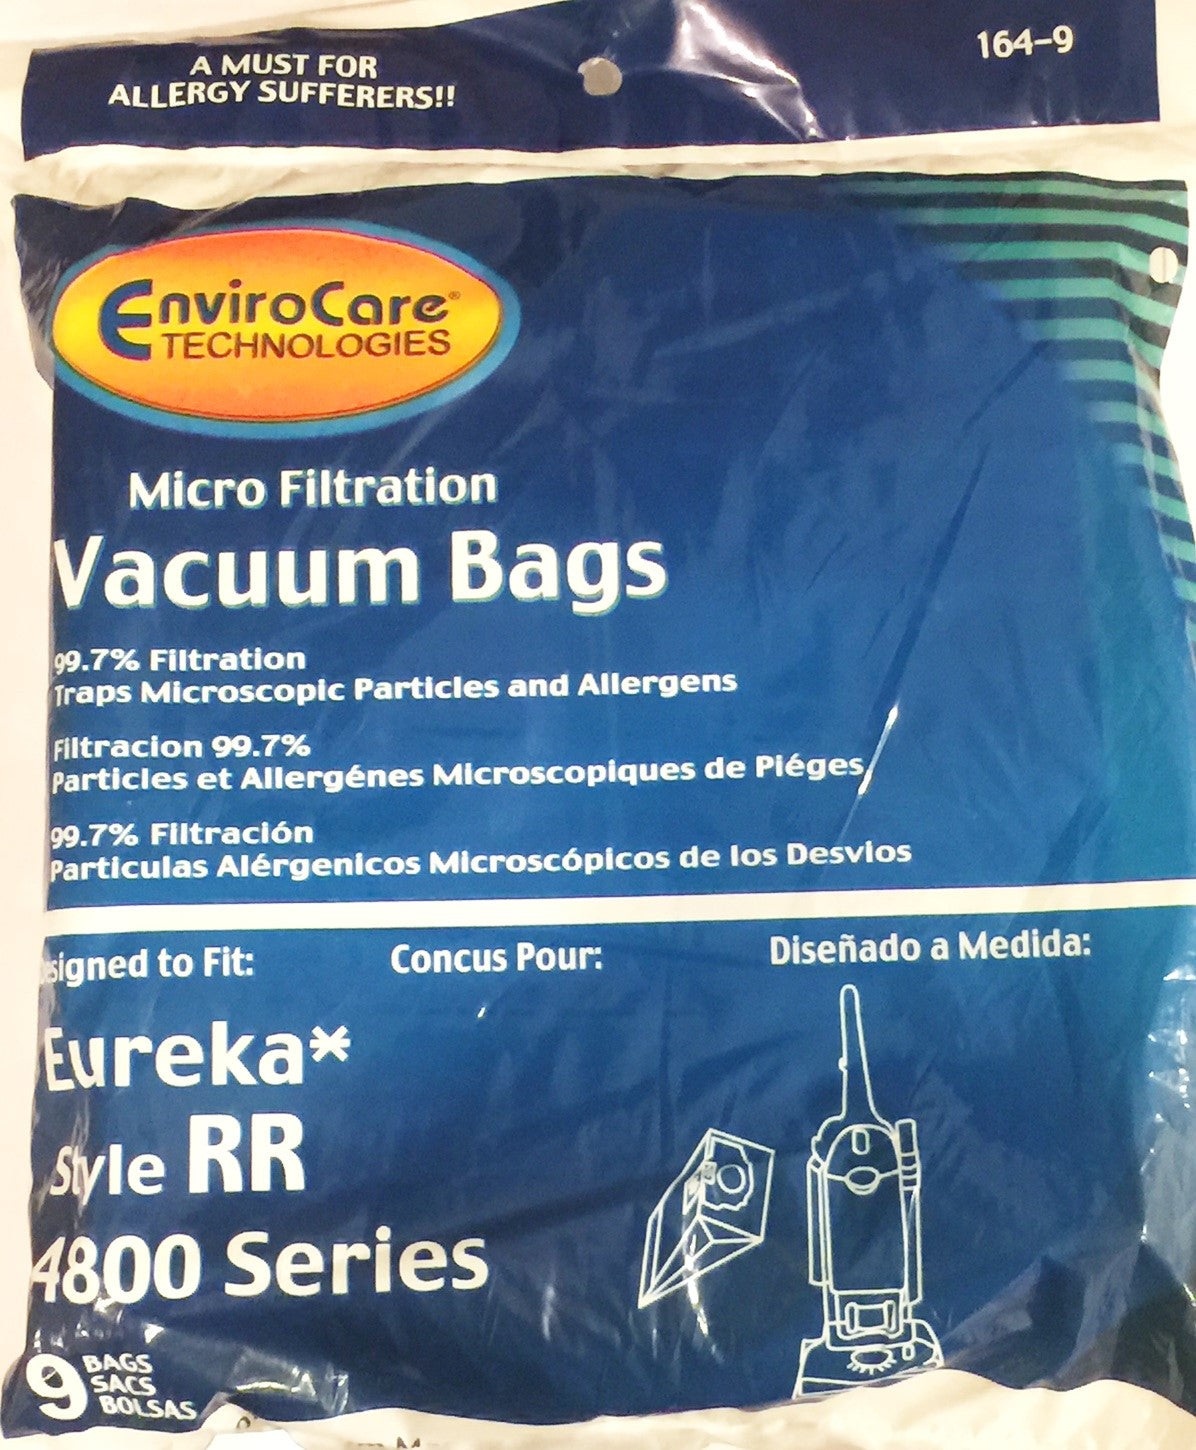 Eureka style RR Vacuum Bags (9 pack)